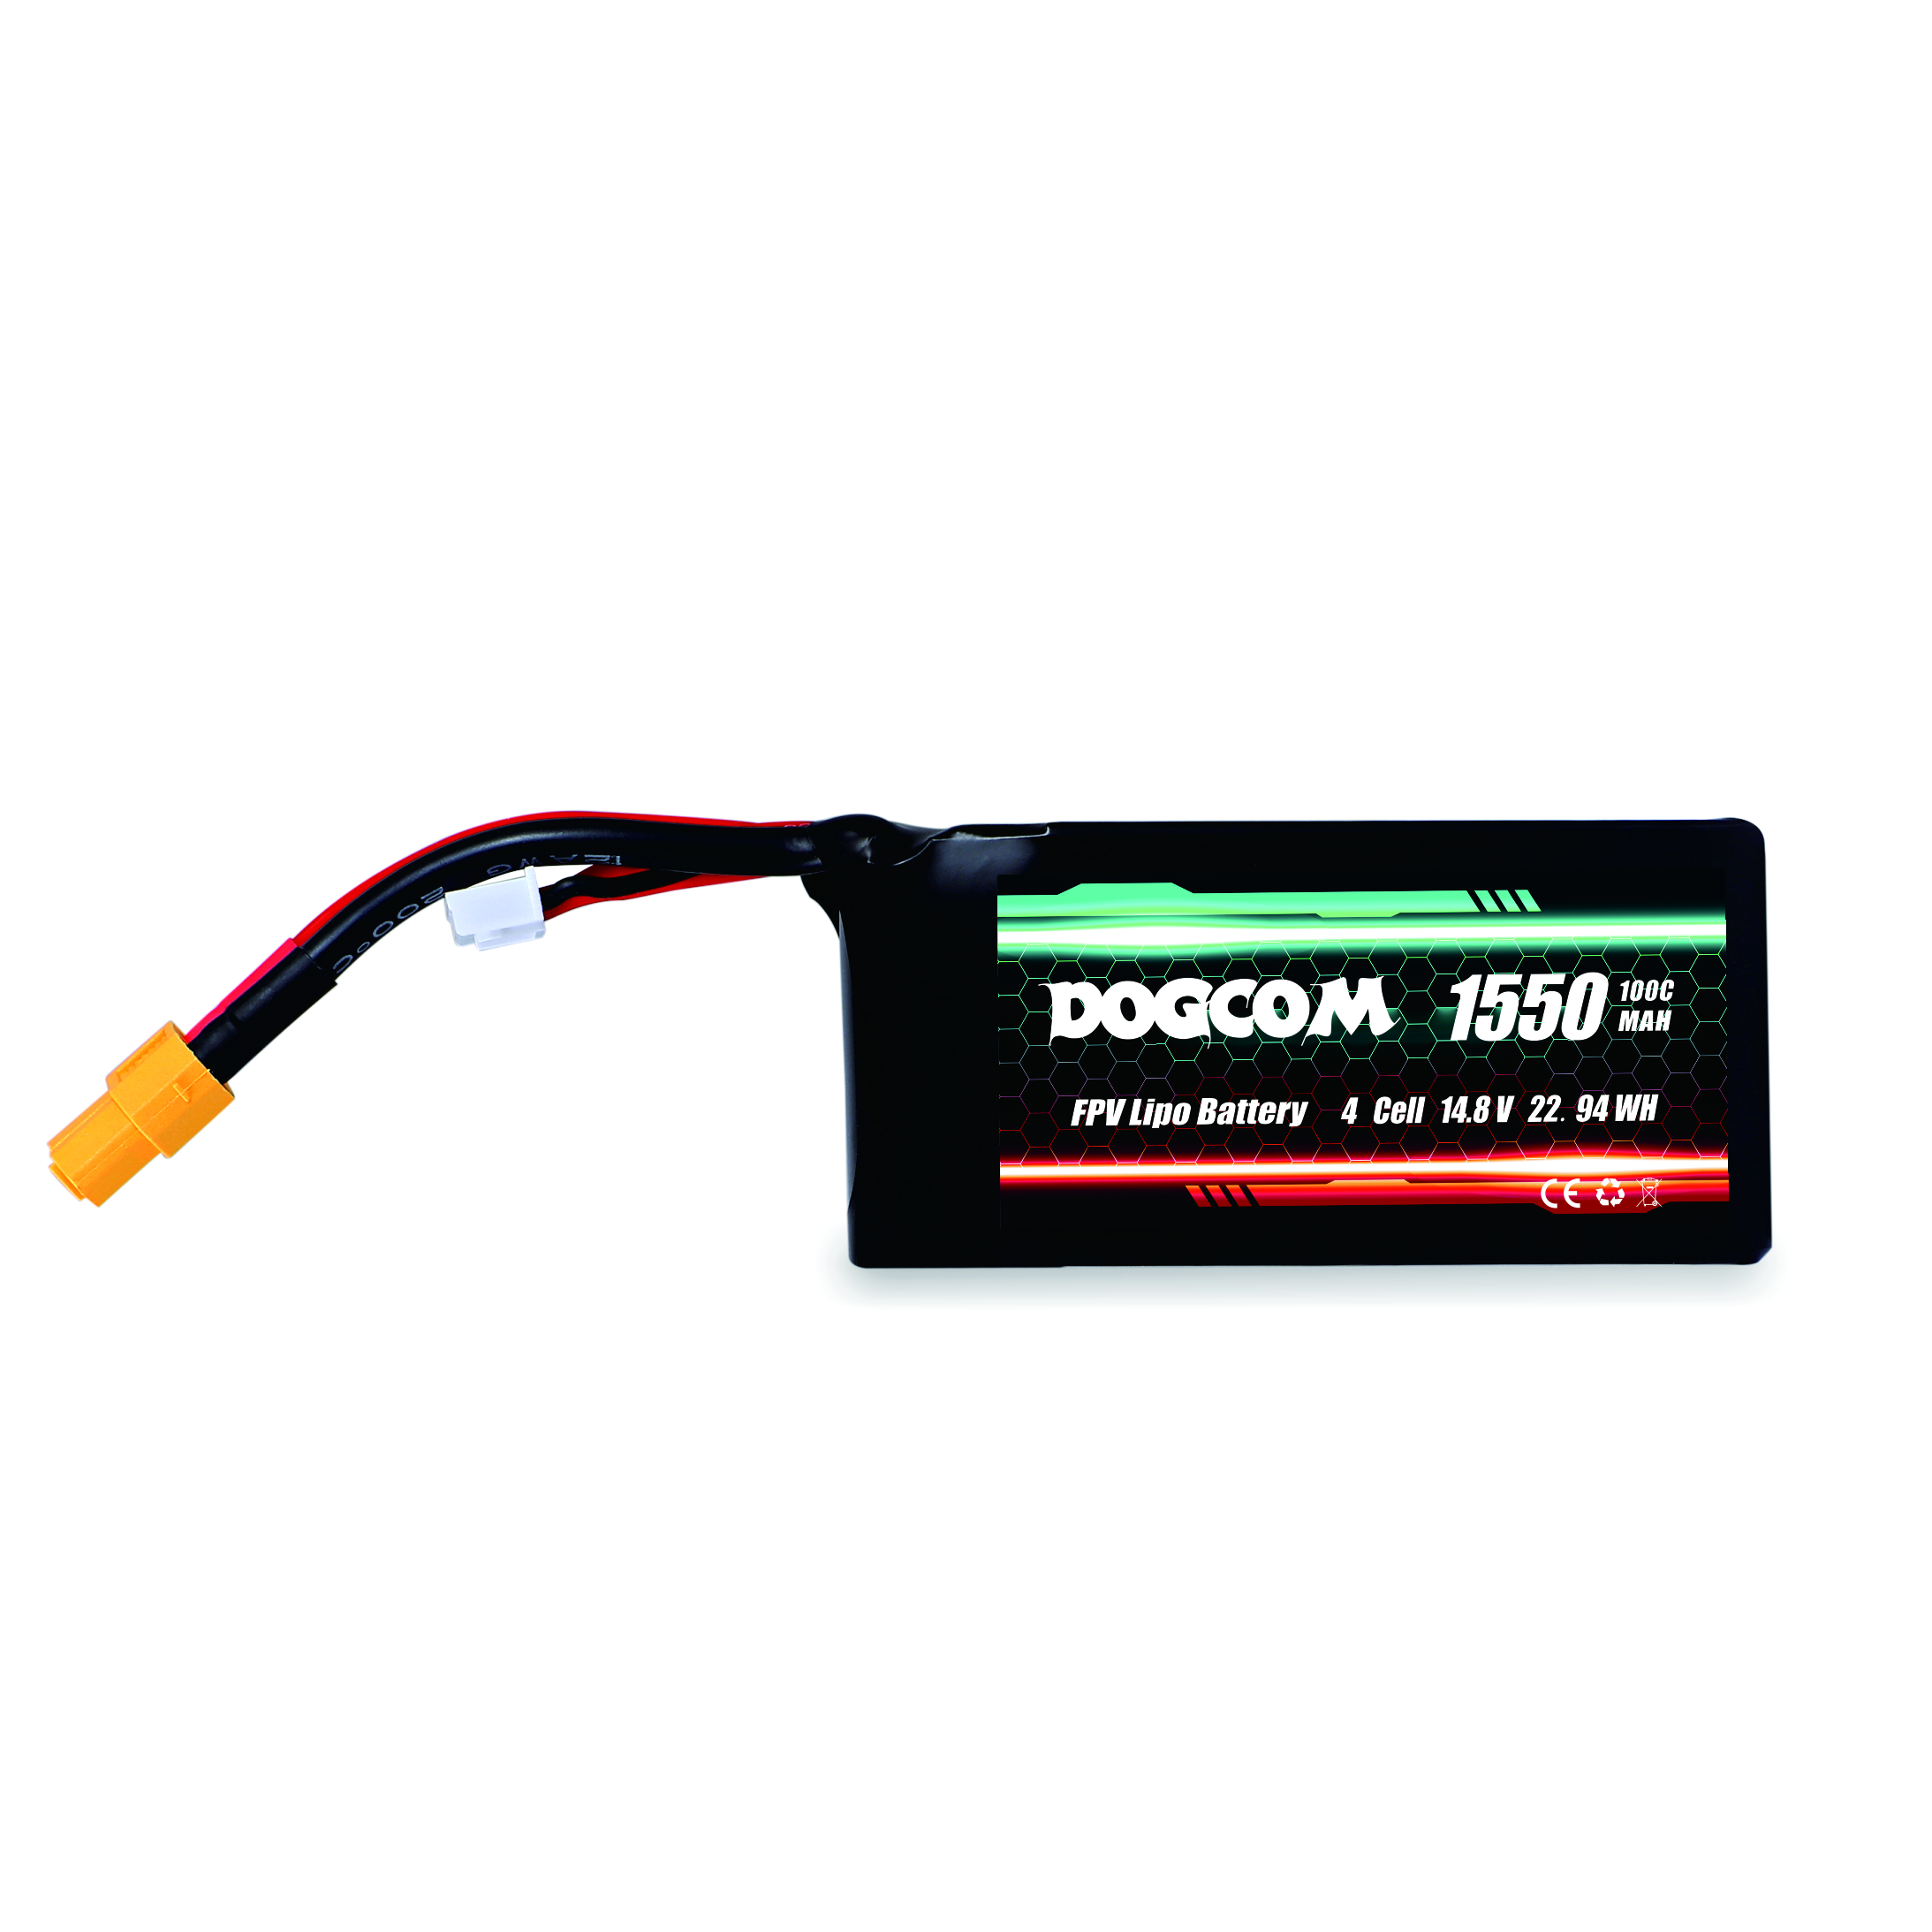 1550mAh 100C 4S 14.8V DOGCOM FPV Lipo battery